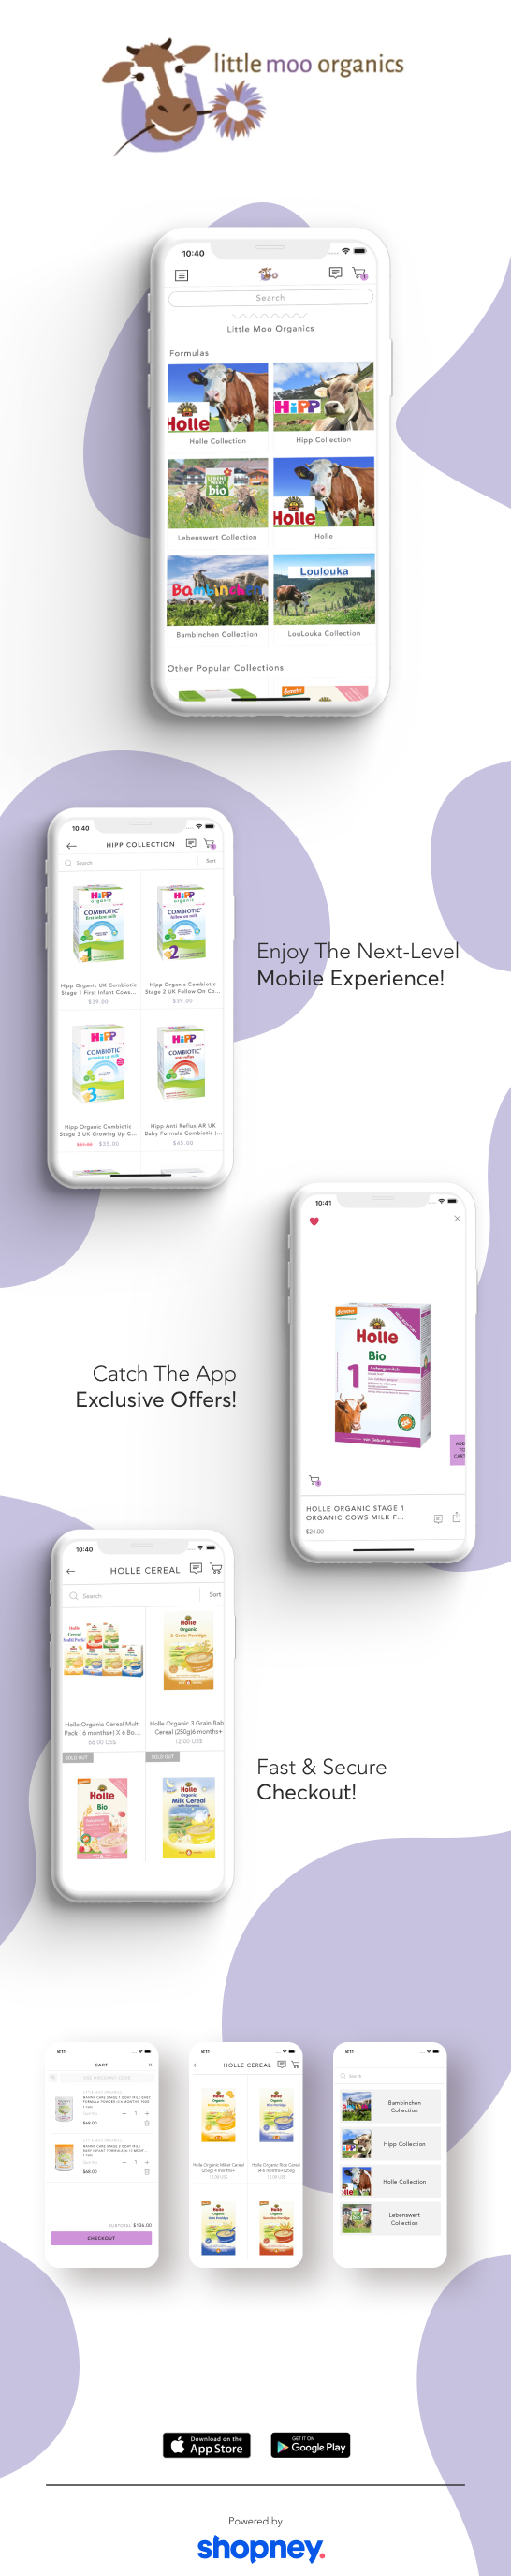 the mobile app design of Little Moo Organics app